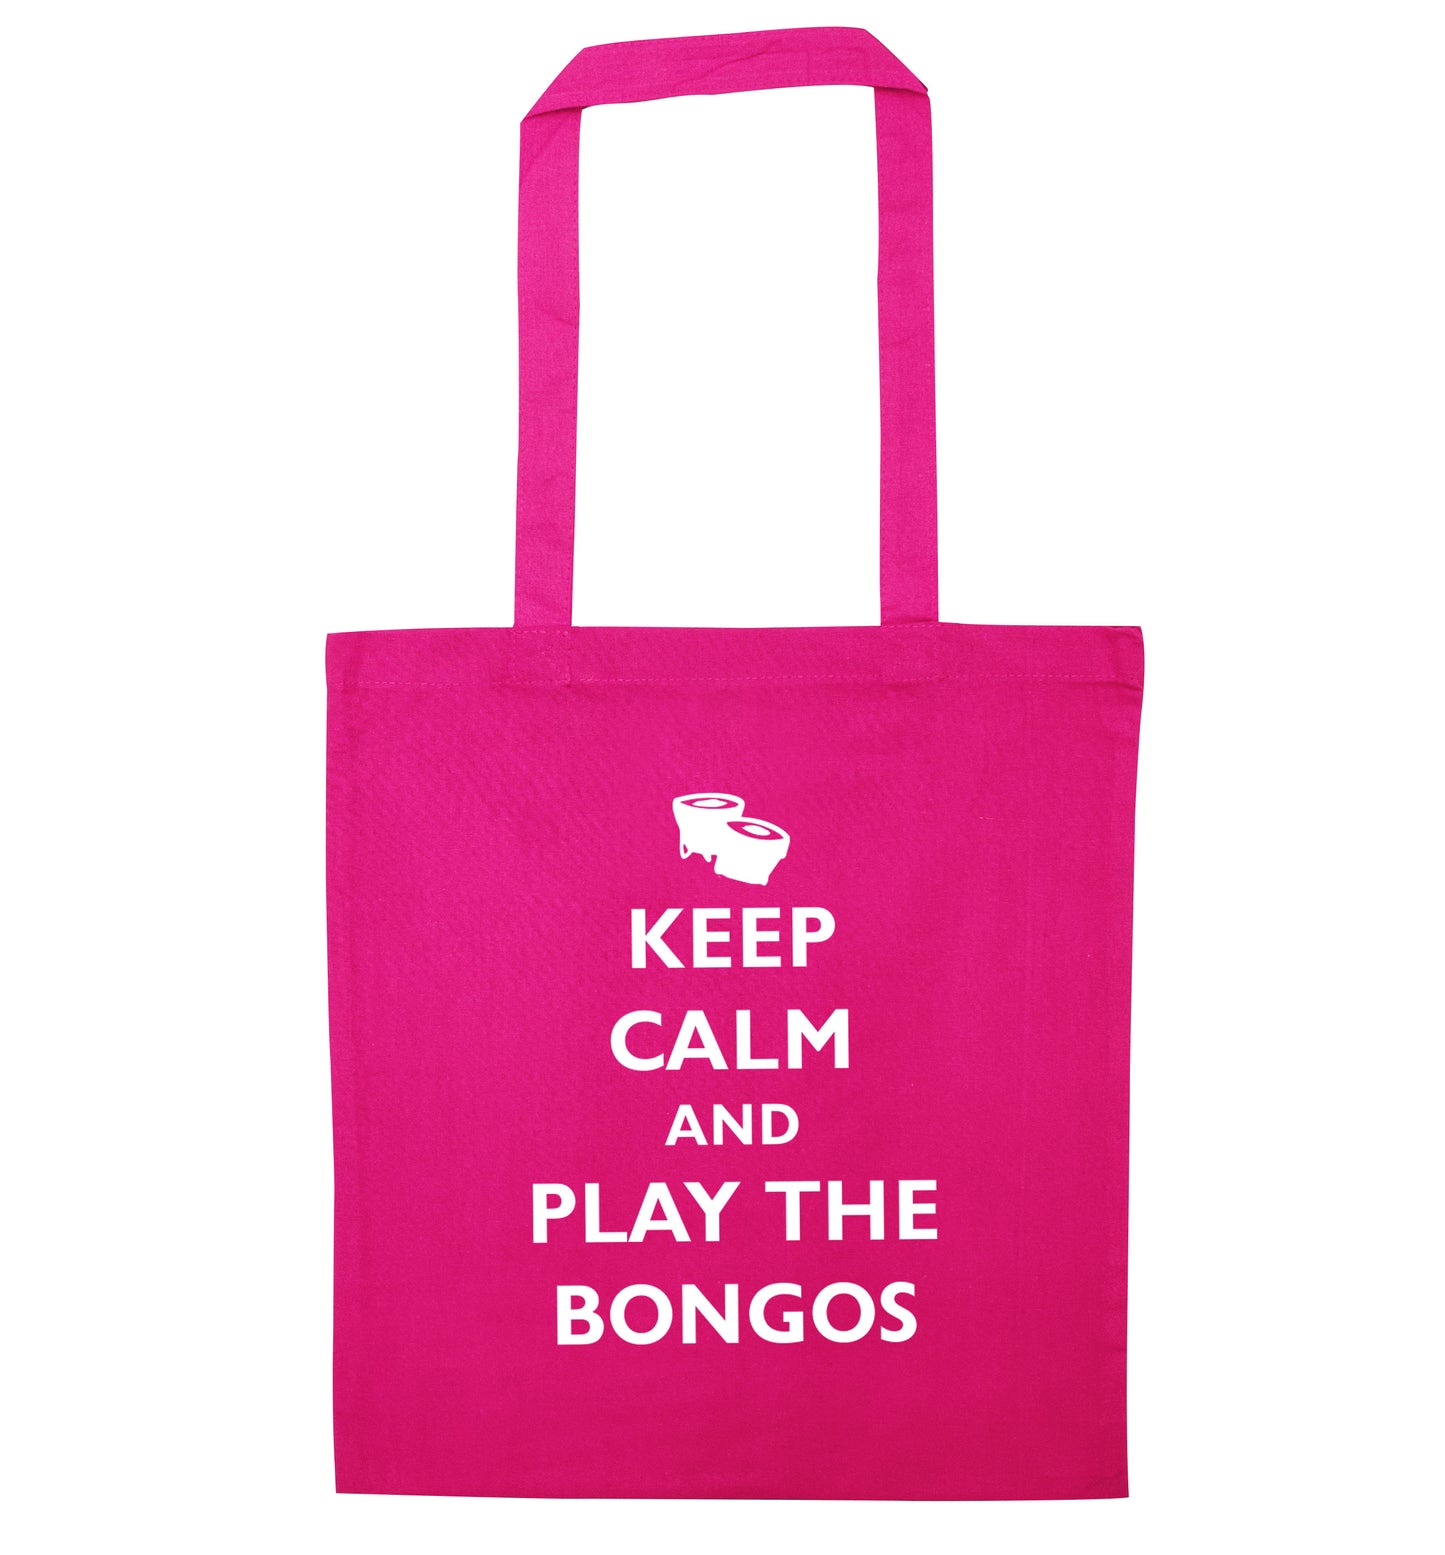 Keep calm and play the bongos pink tote bag